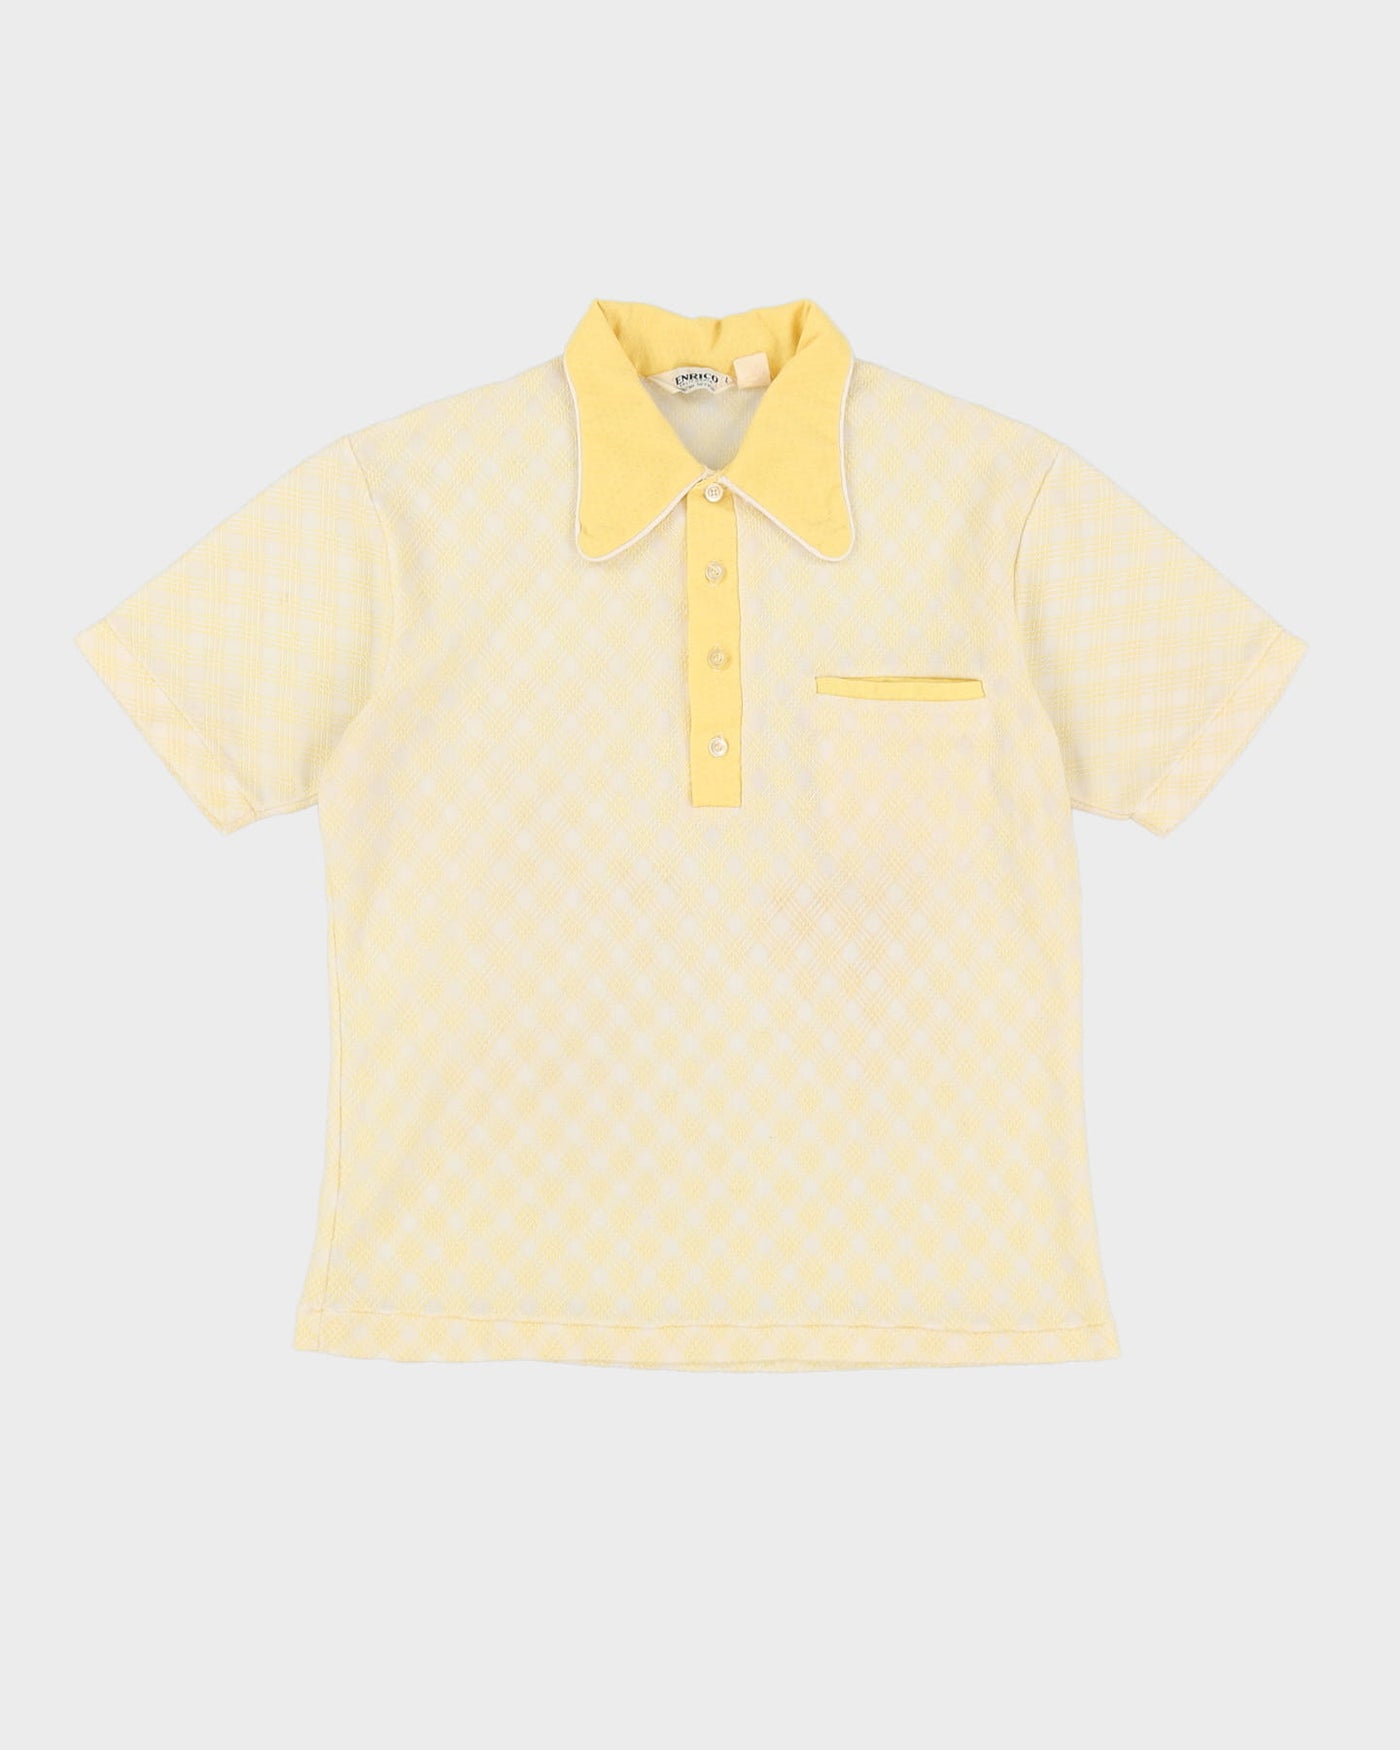 70s Enrico California Yellow Polo Shirt - M / L